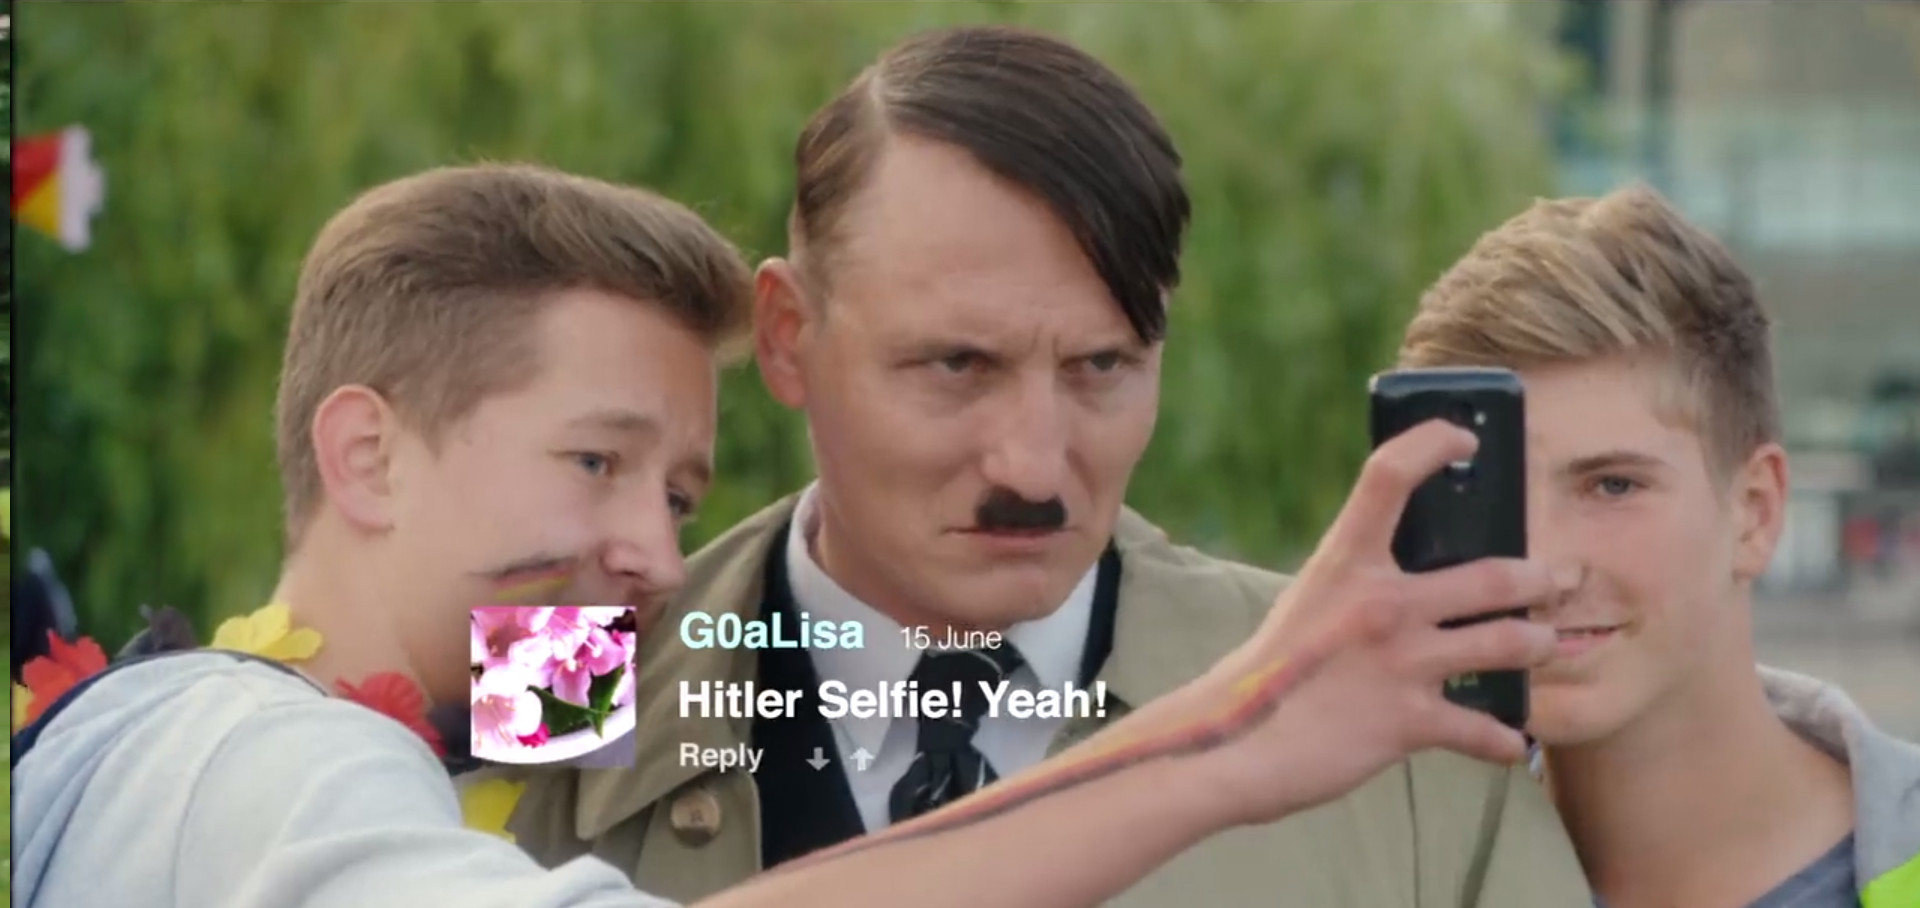 HitlerSelfie